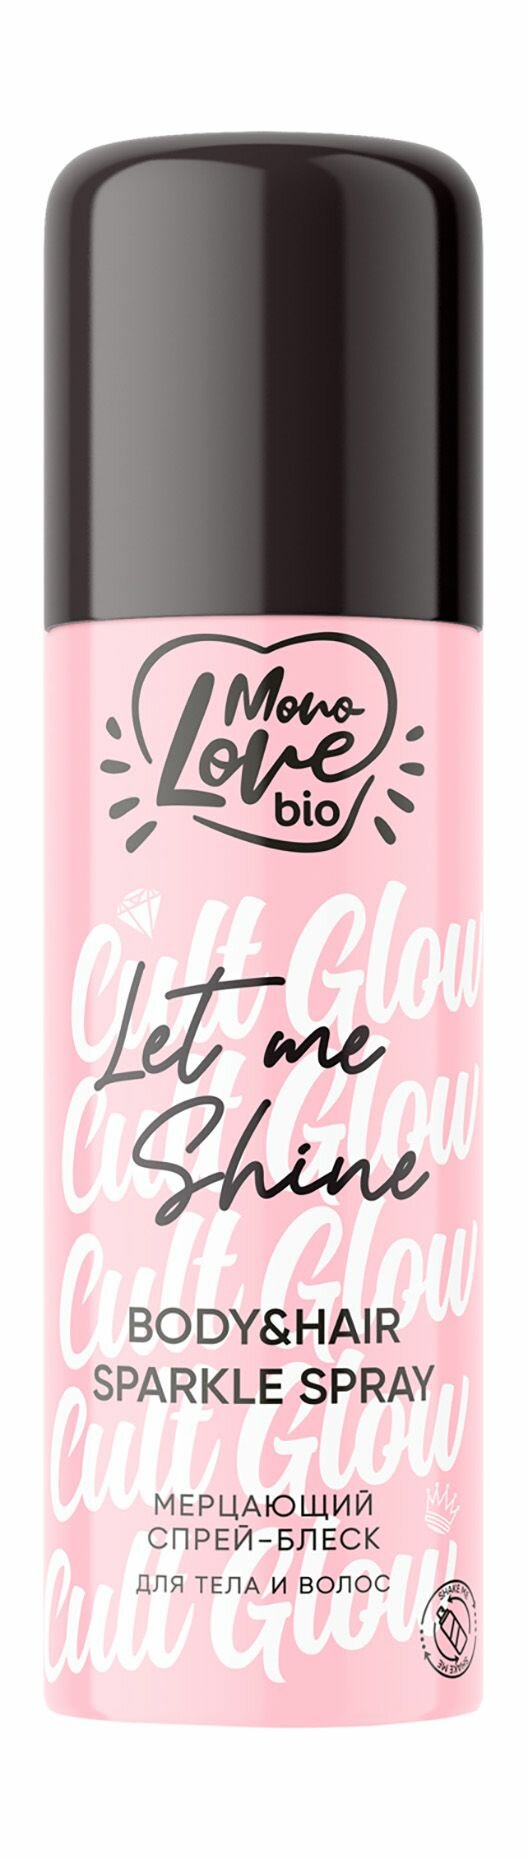 Мерцающий спрей-блеск для тела и волос / MonoLove Bio Let Me Shine Body & Hair Sparkle Spray